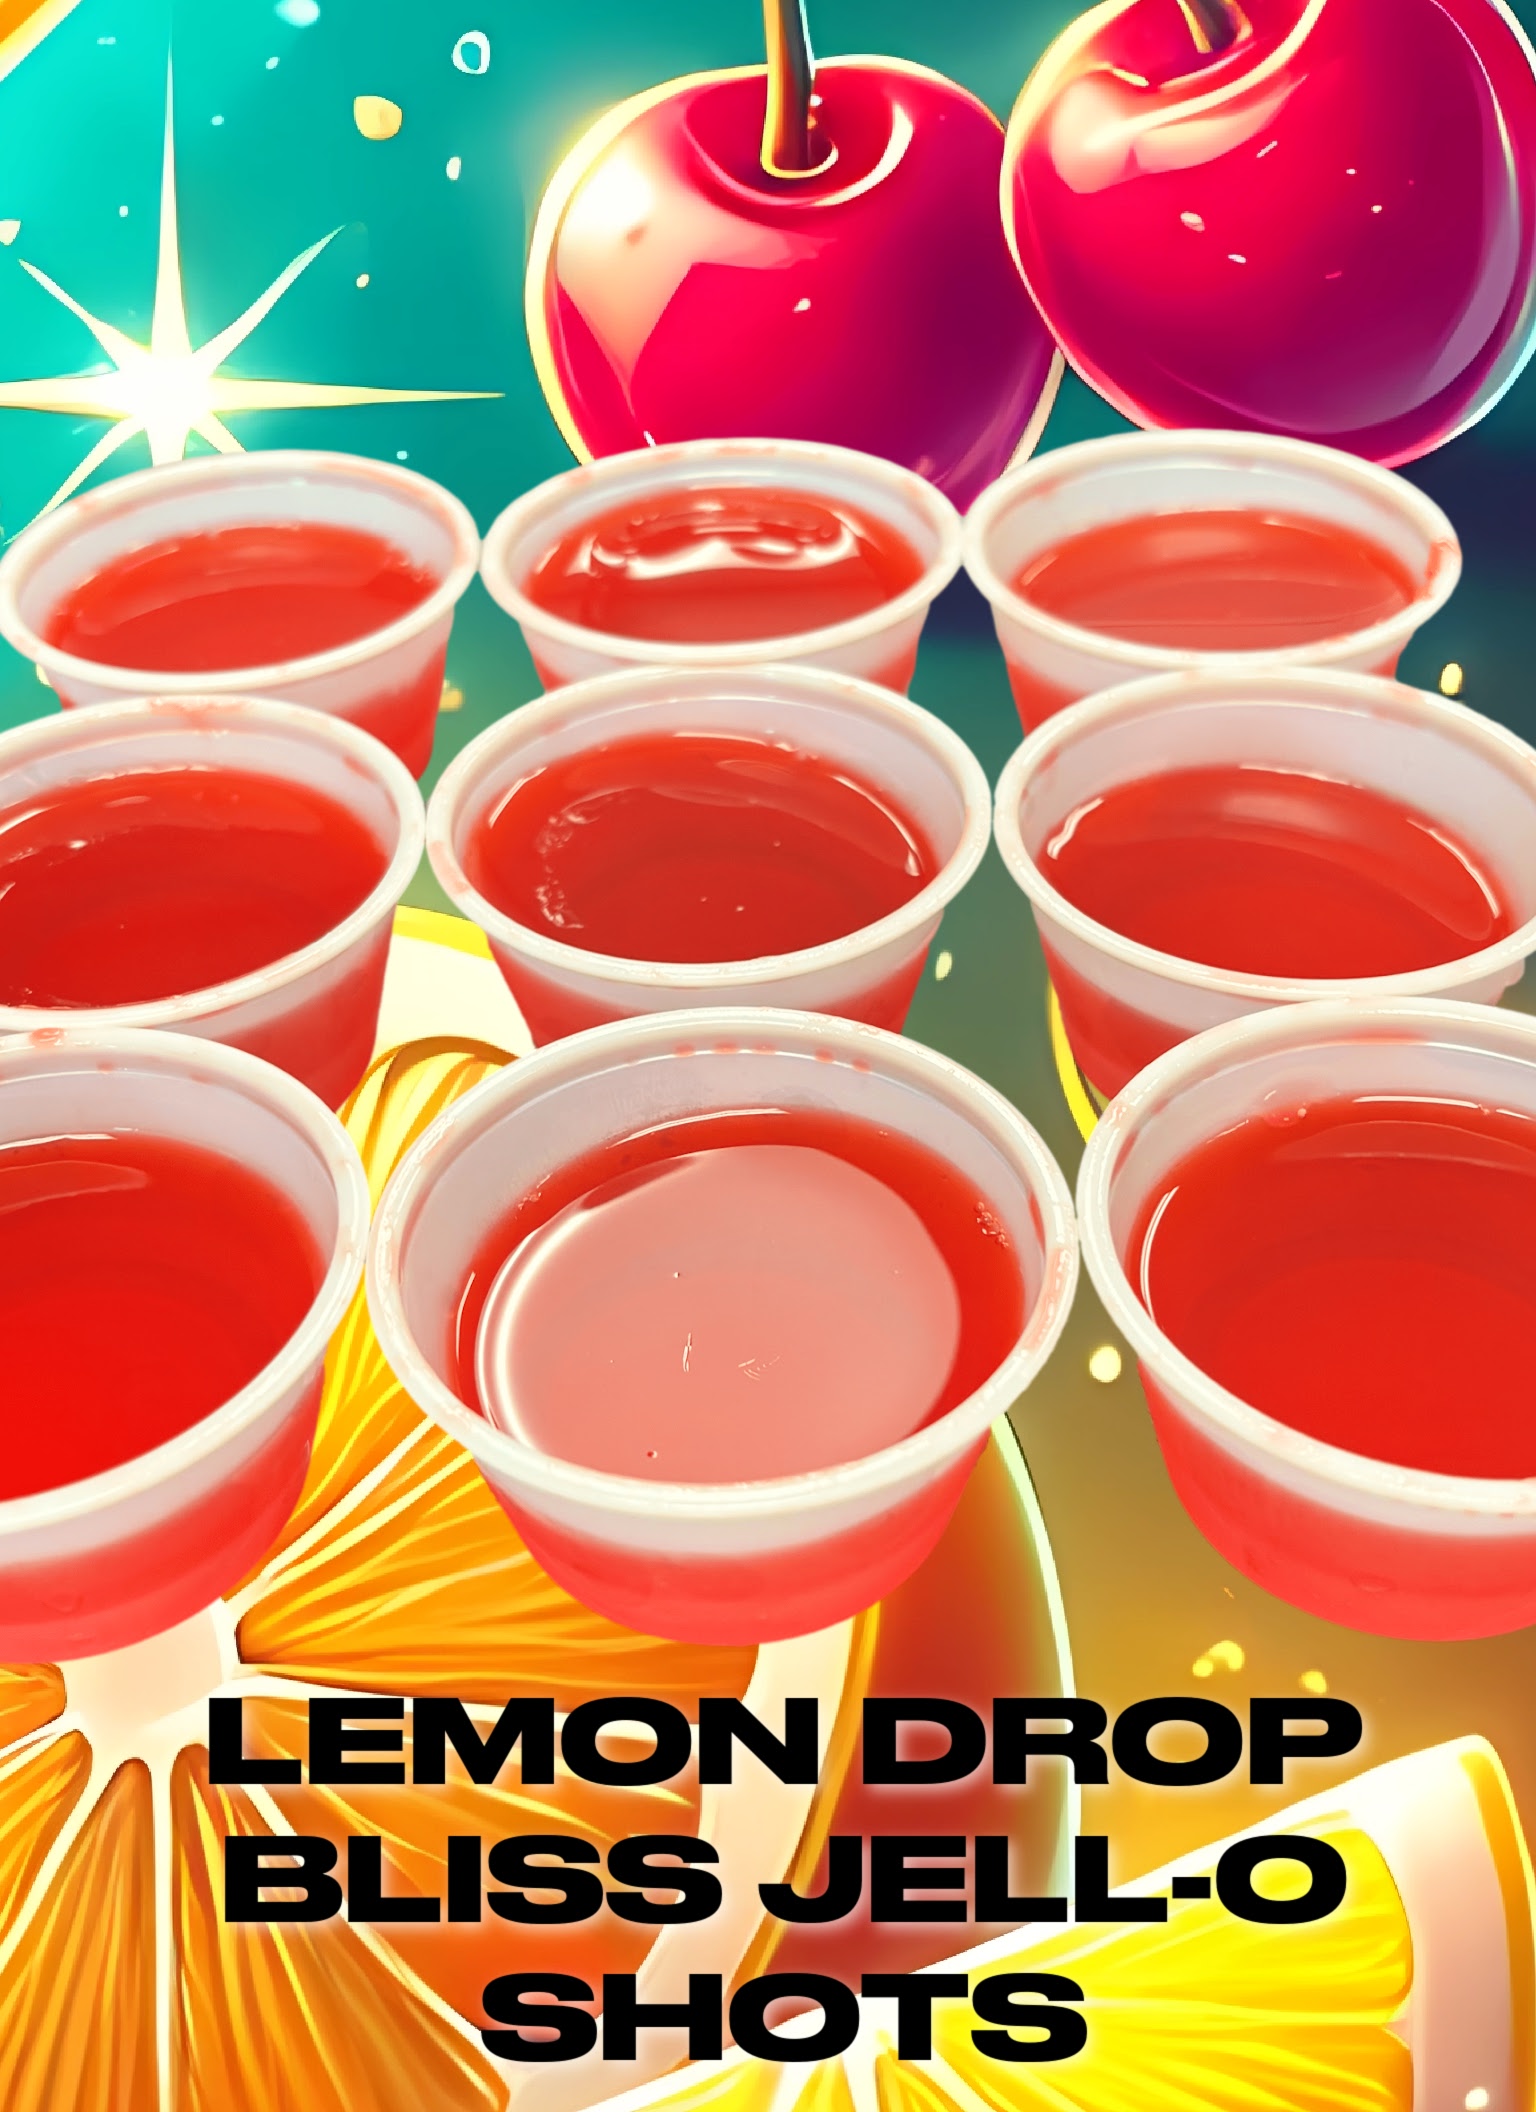 Lemon Drop Bliss Jell-O Shots